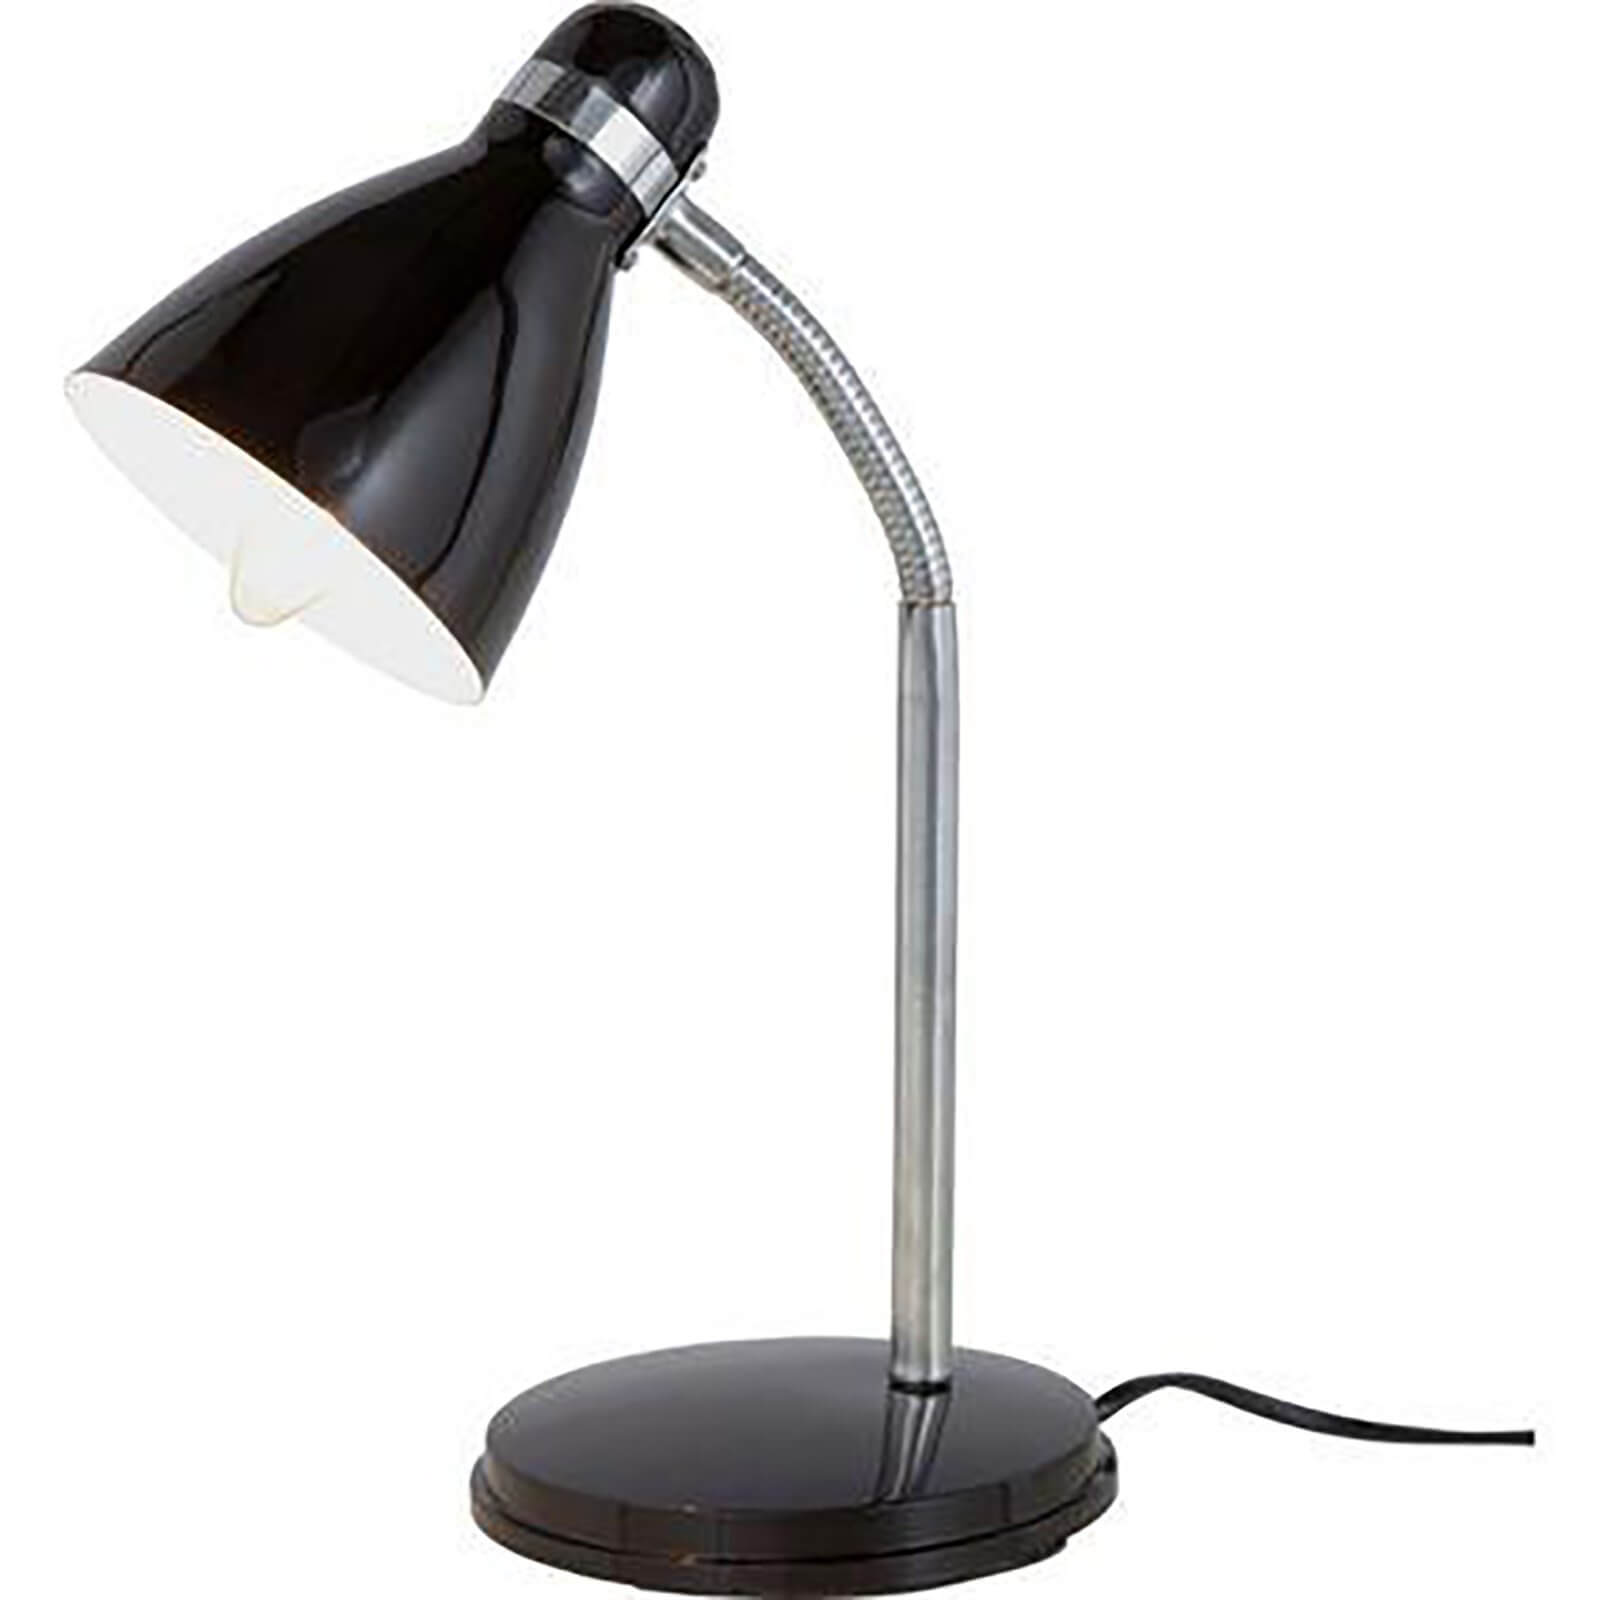 Hampton Desk Lamp - Black